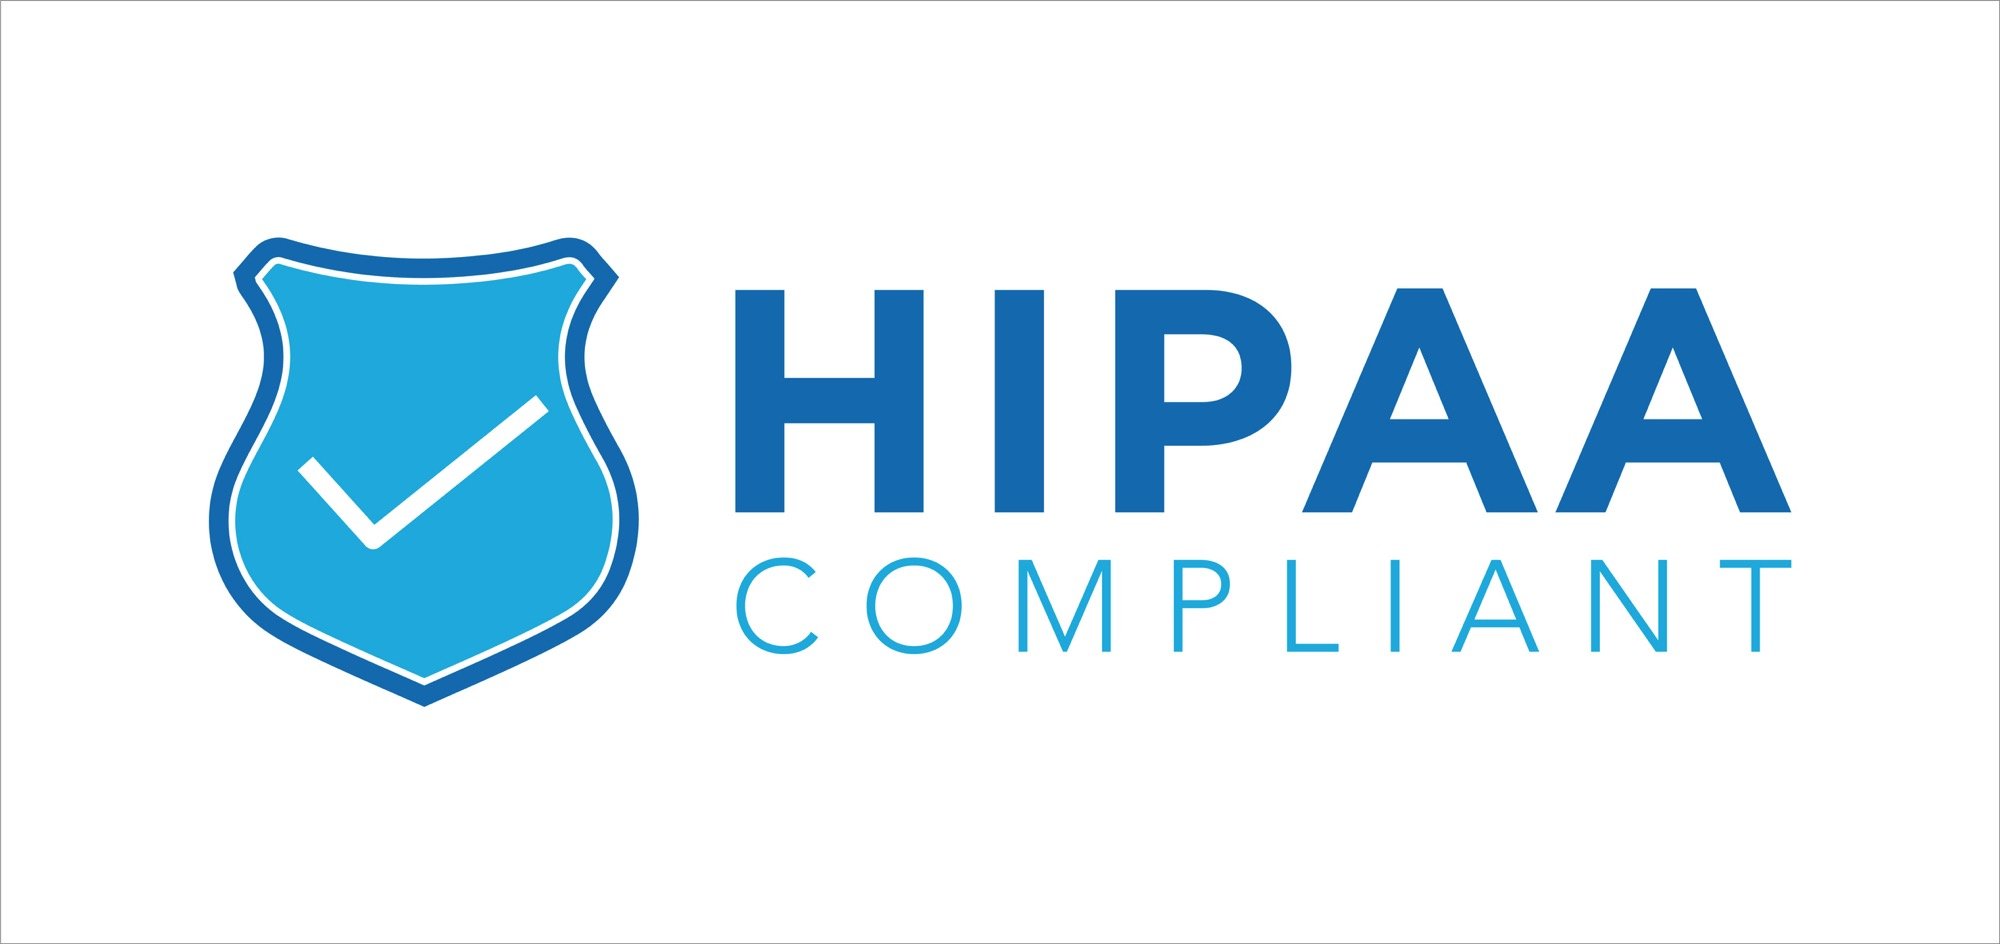 HIPAA Compliant Email